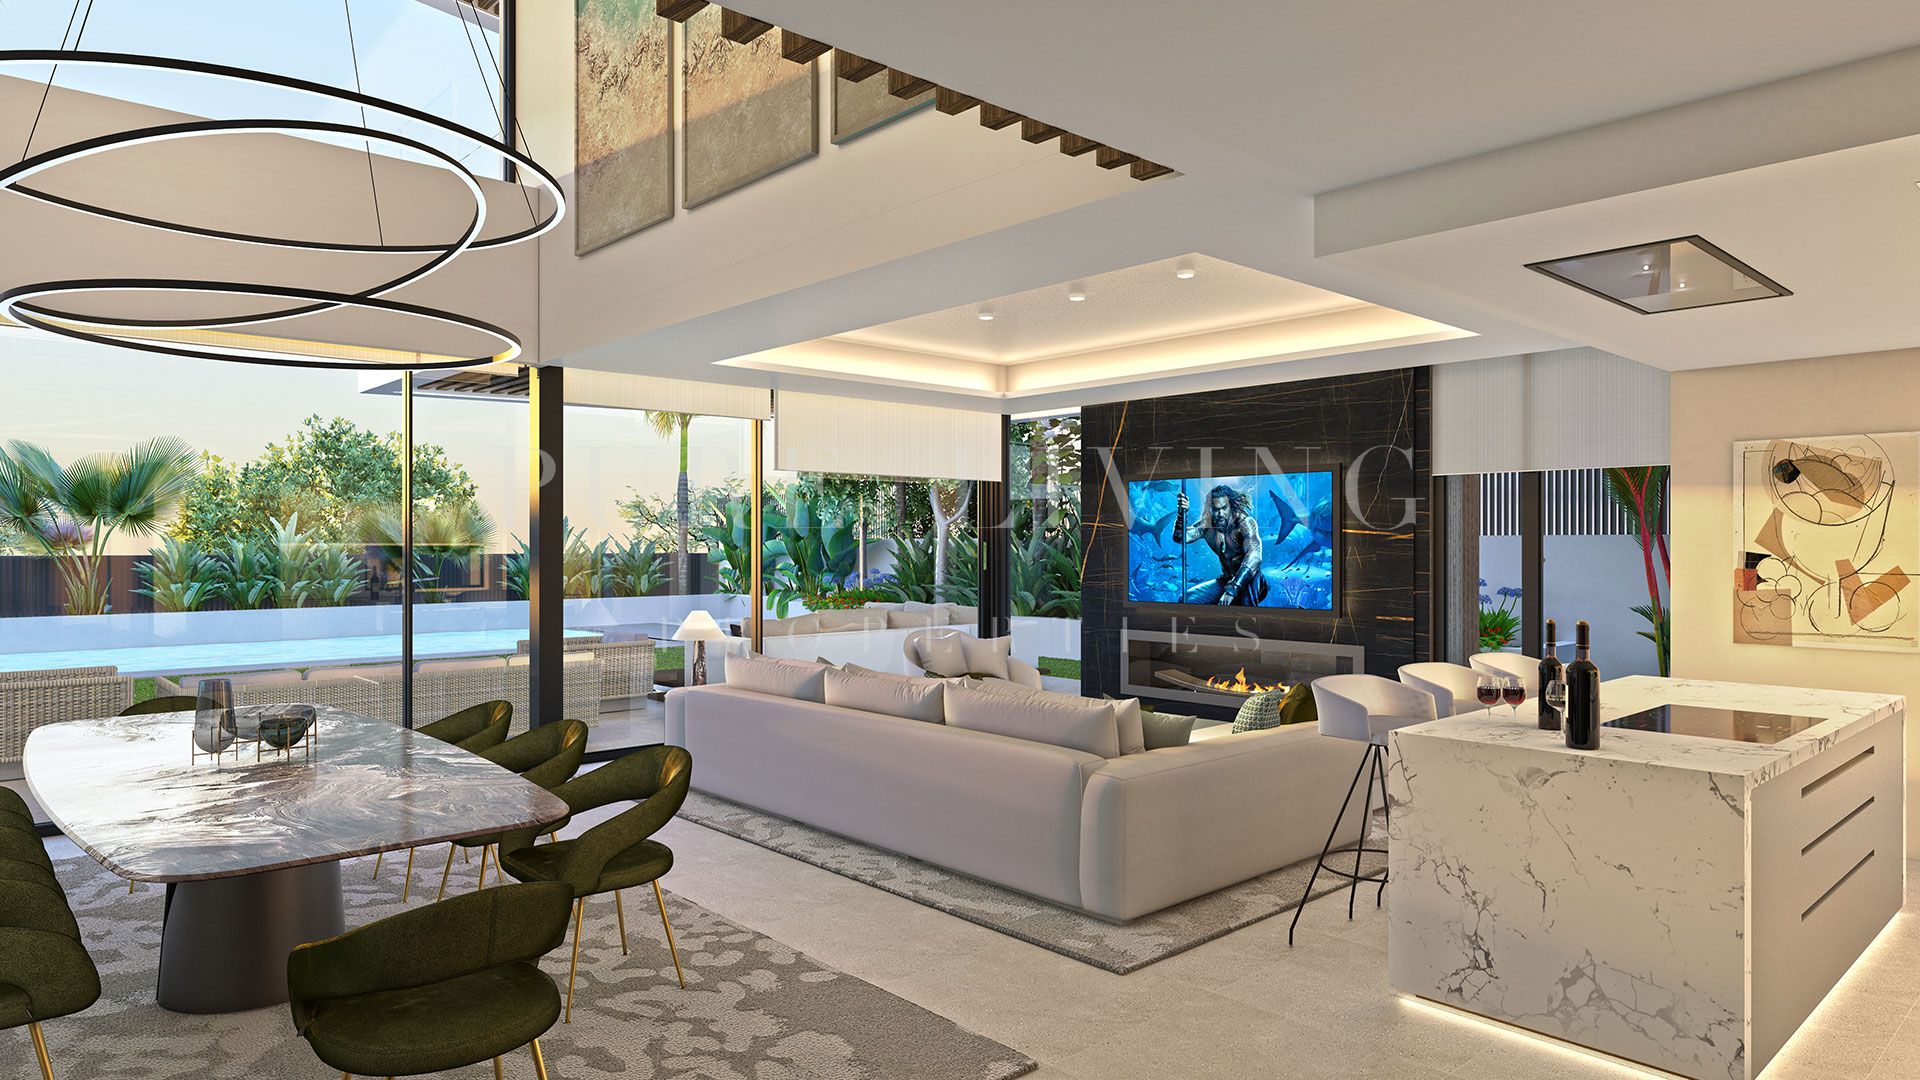 Newly built luxury Villa in Puerto Banus